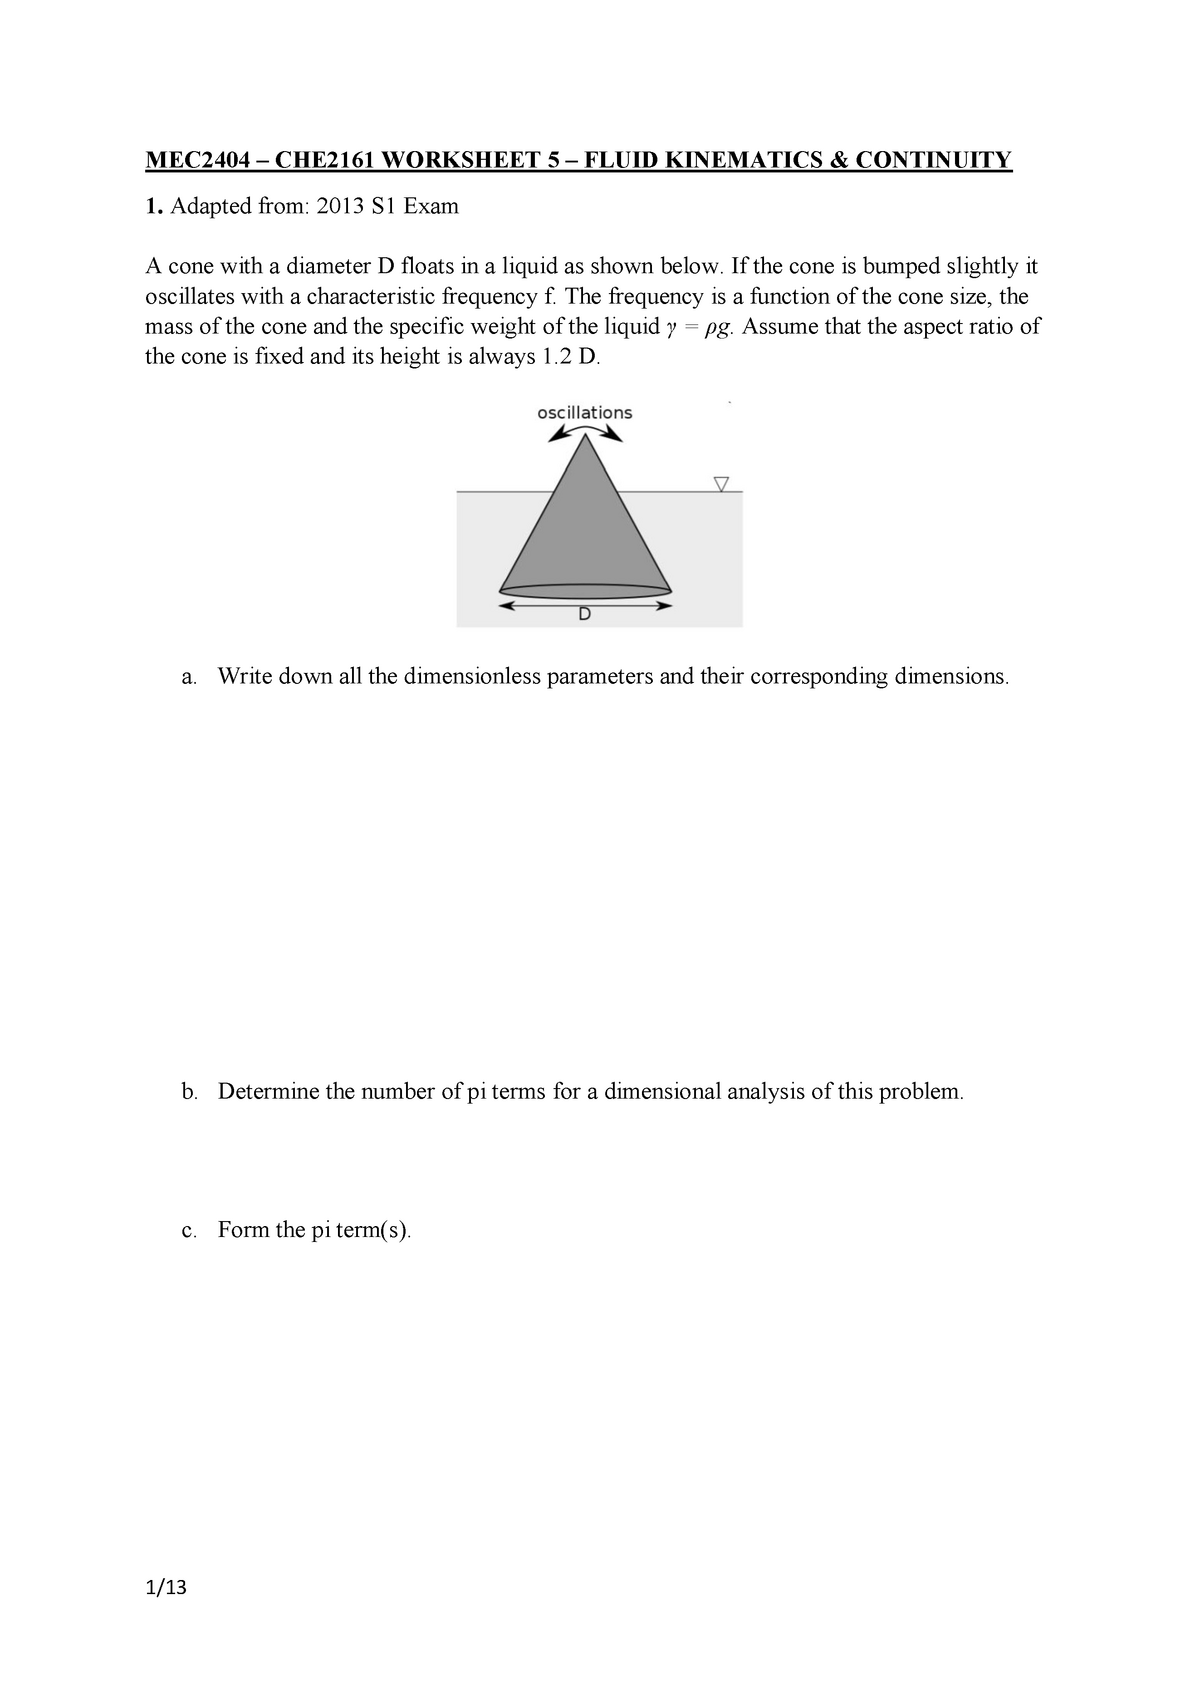 Worksheet 25 - Dimensional Analysis - StuDocu Pertaining To Dimensional Analysis Worksheet 2